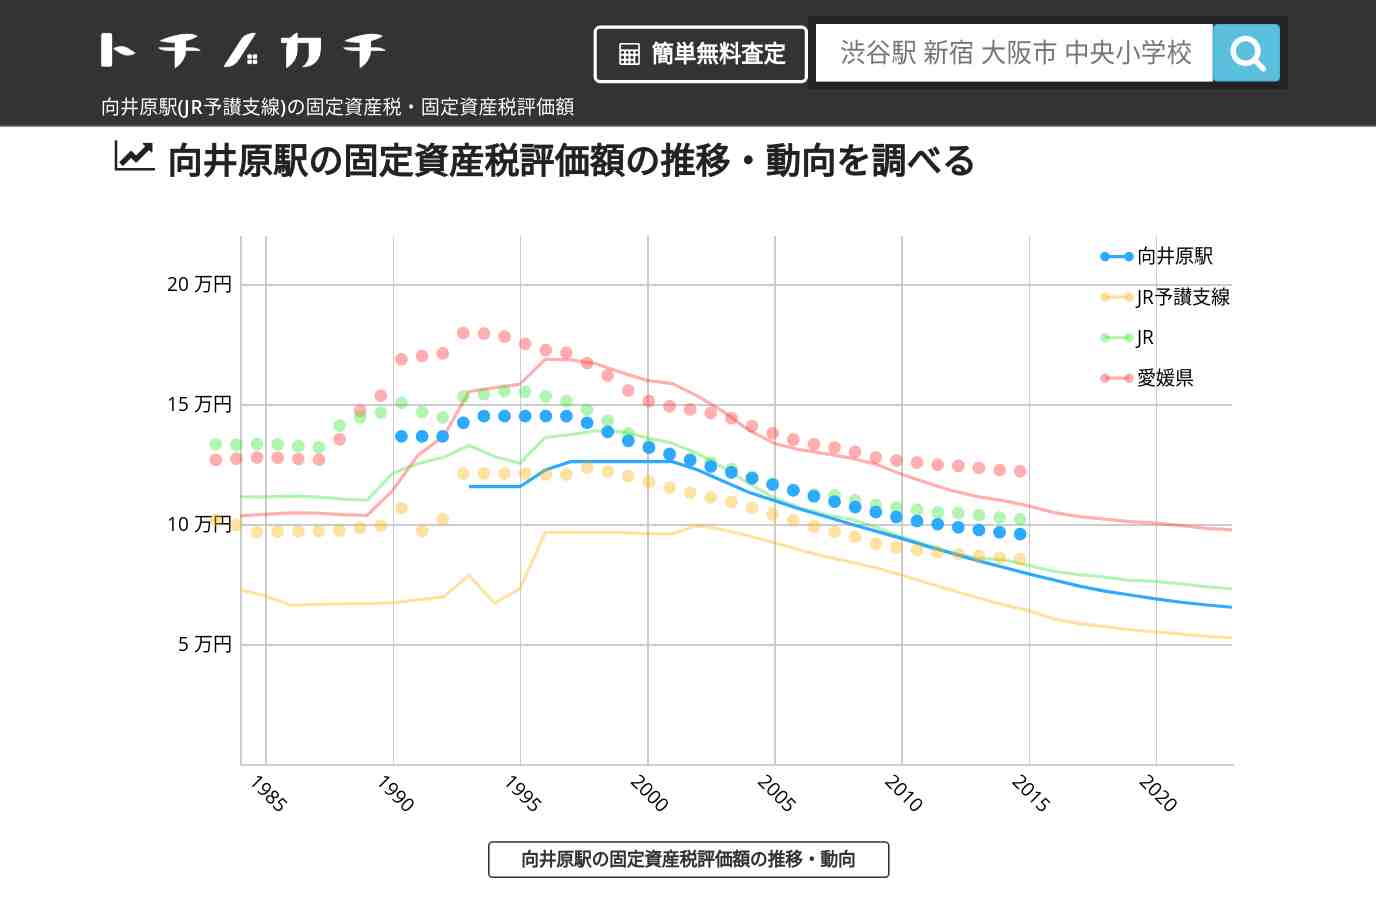 向井原駅(JR予讃支線)の固定資産税・固定資産税評価額 | トチノカチ